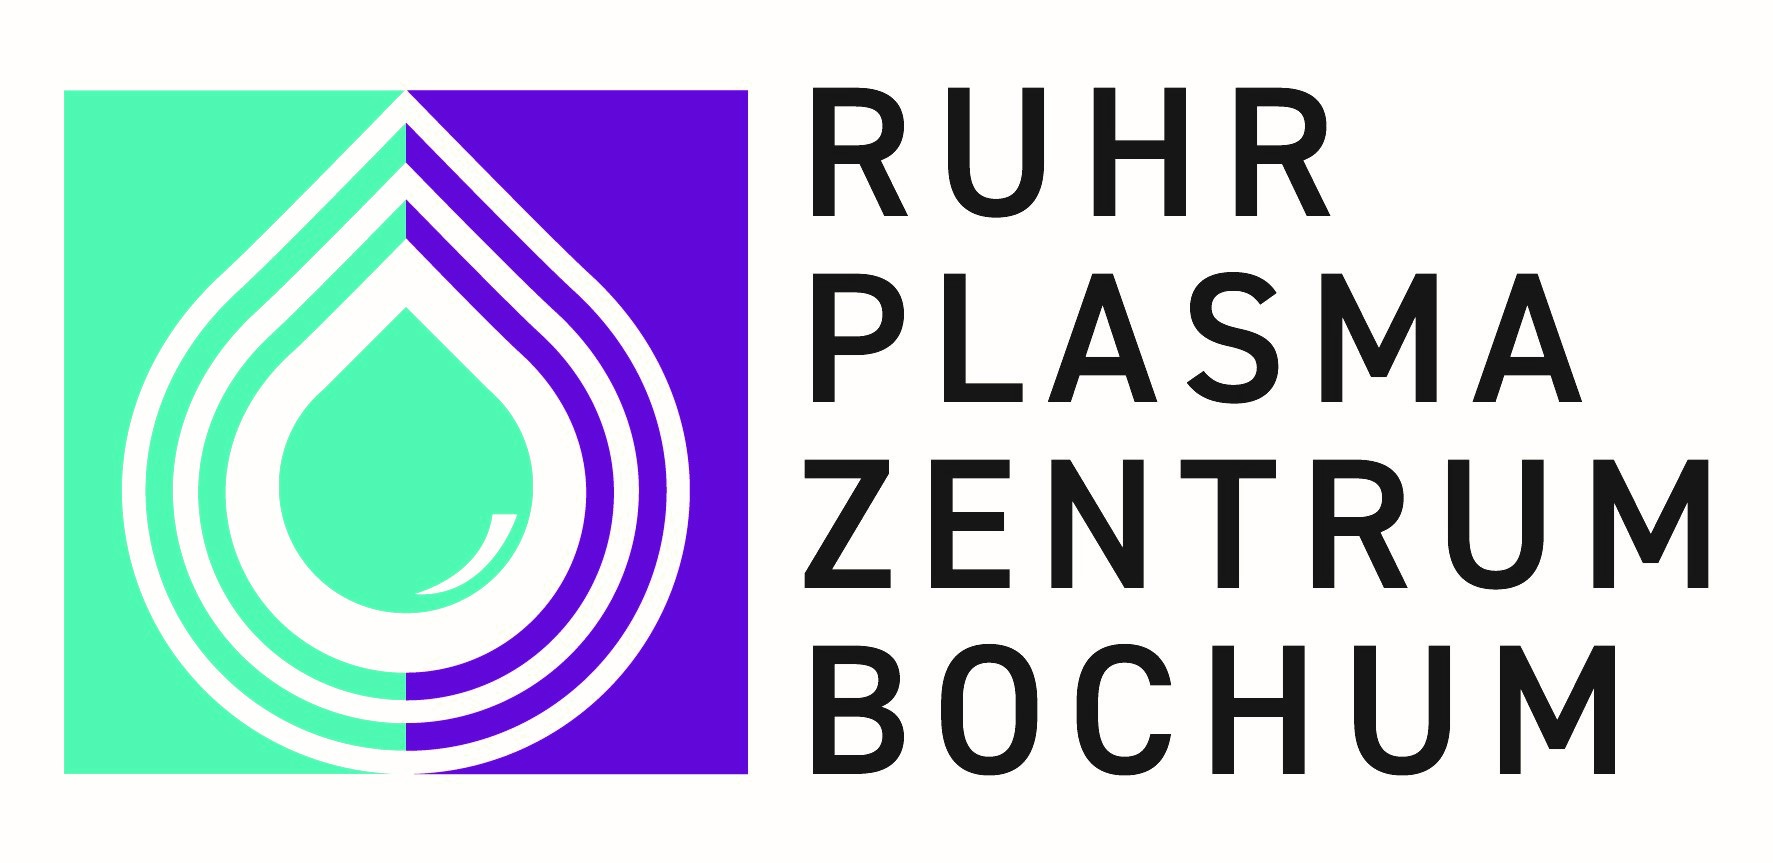 Ruhr Plasma Collection Center 2